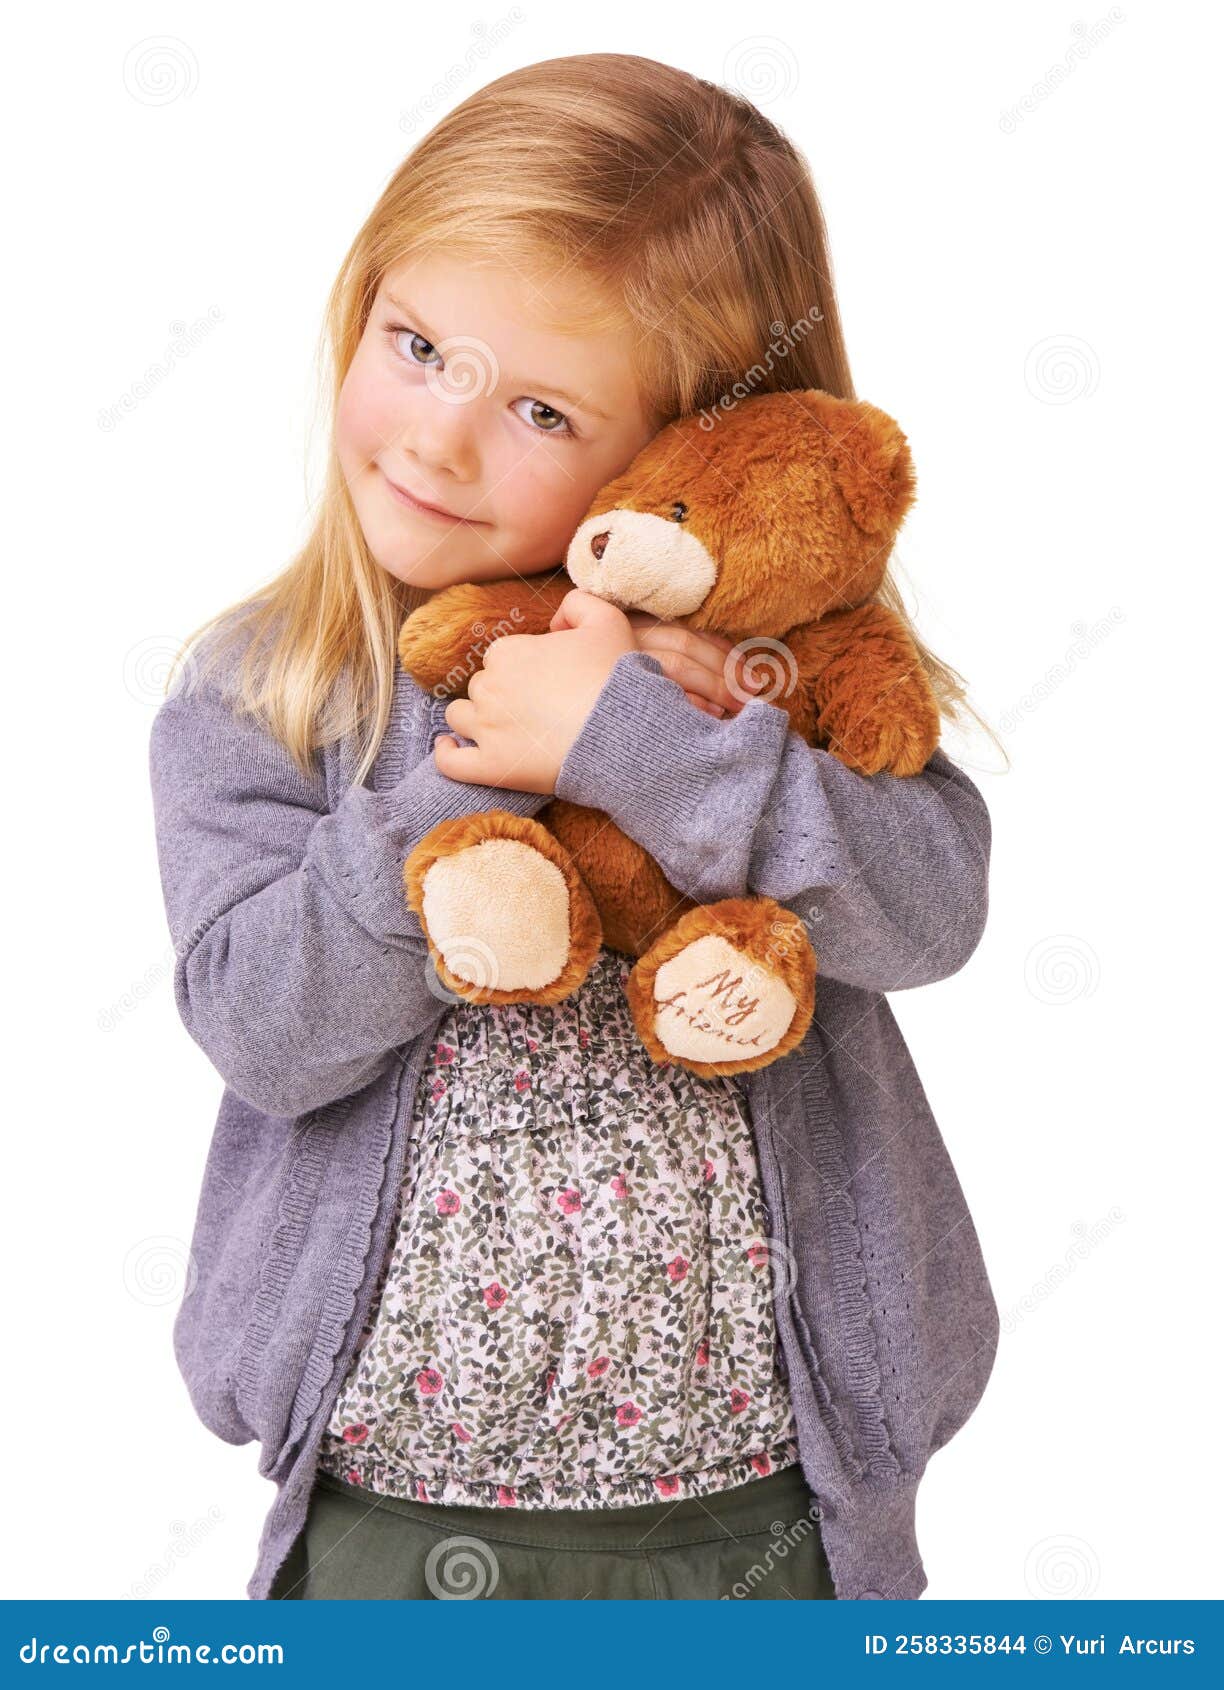 She Loves Her Teddy. a Cute Little Girl Holding Her Teddy Bear. Stock ...